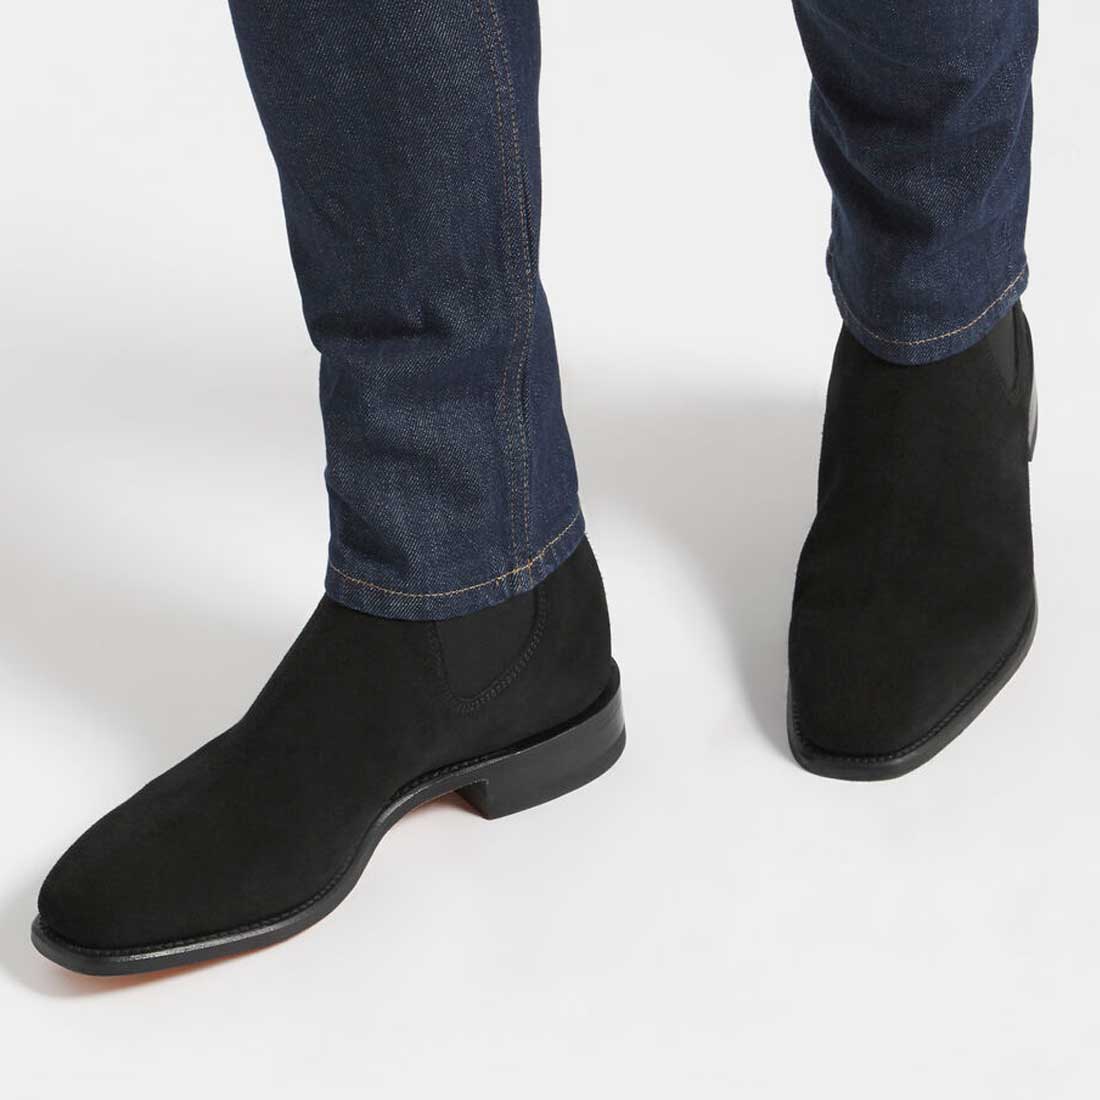 RM WILLIAMS Boots - Men's Comfort Craftsman - Black Suede